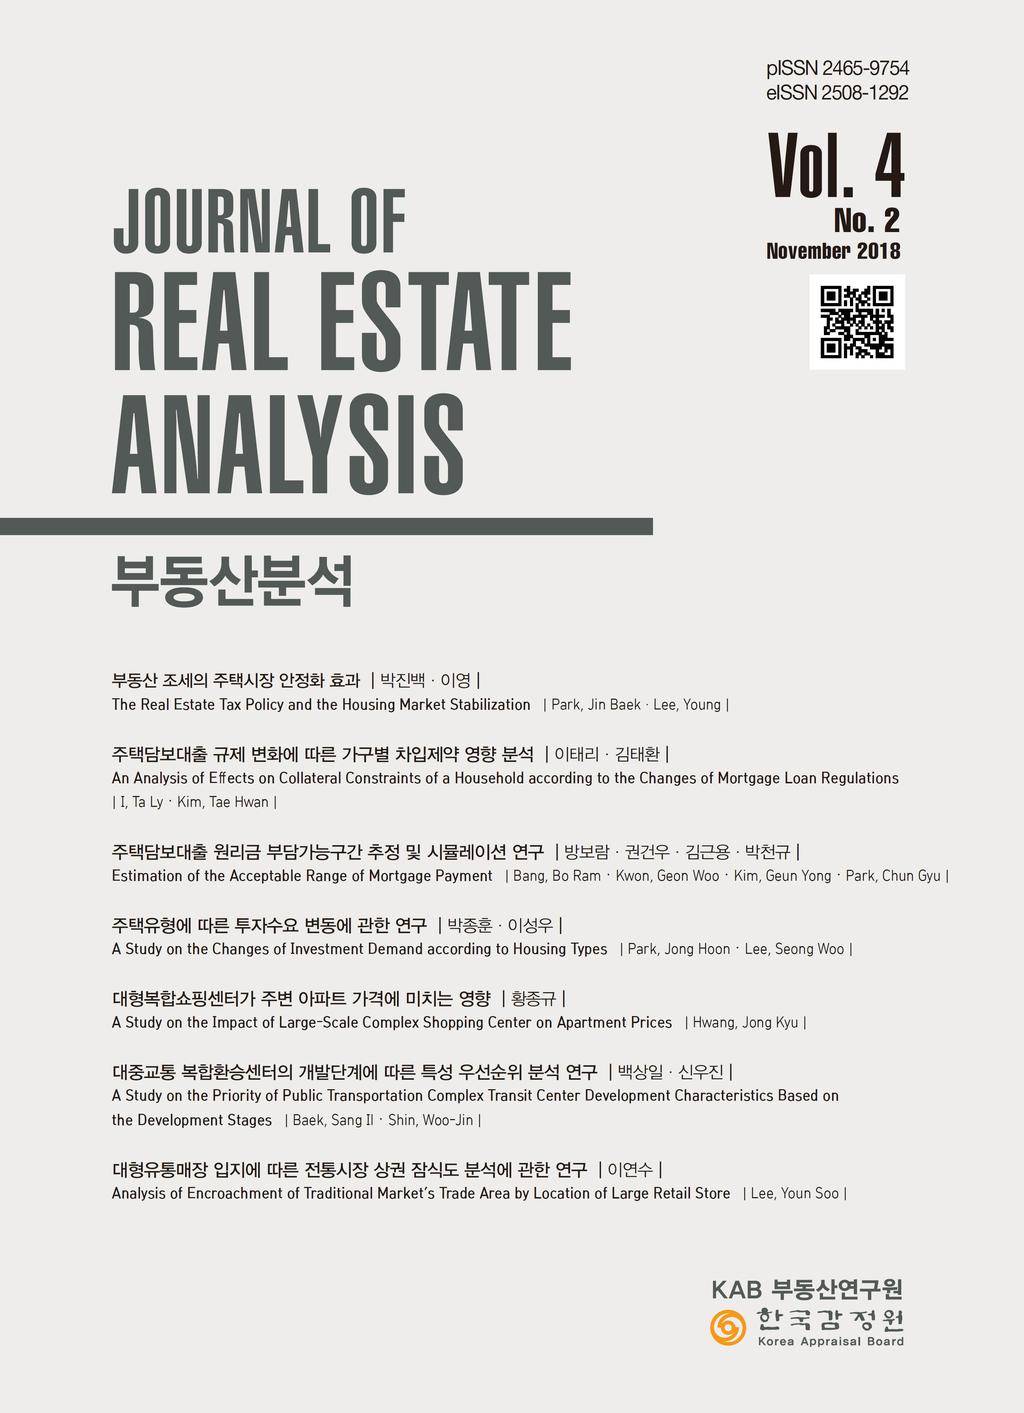 pissn : 2465-9754 eissn : 2508-1292 https://doi.org/10.30902/jrea.2018.4.2.21 Journal of Real Estate Analysis http://www.kabjrea.org November 2018, Vol.4, No.2, pp.